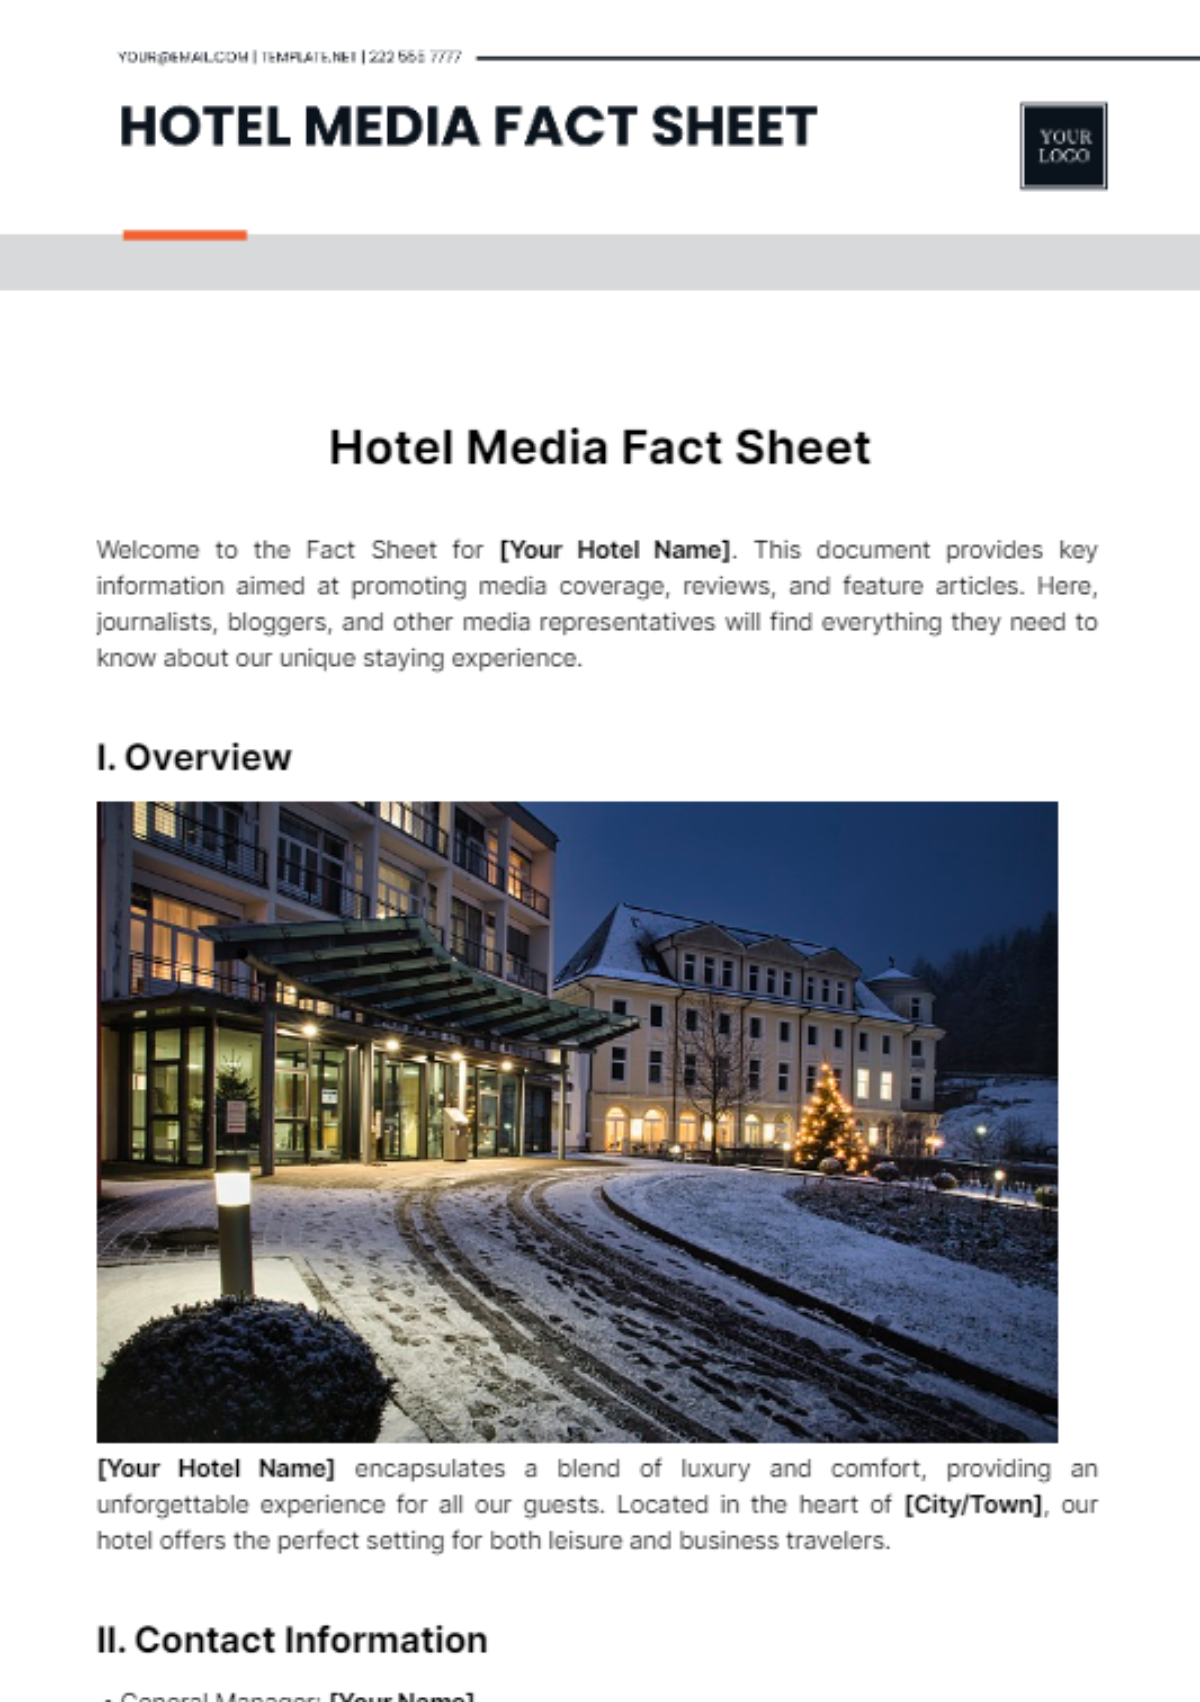 Free Hotel Media Fact Sheet Template